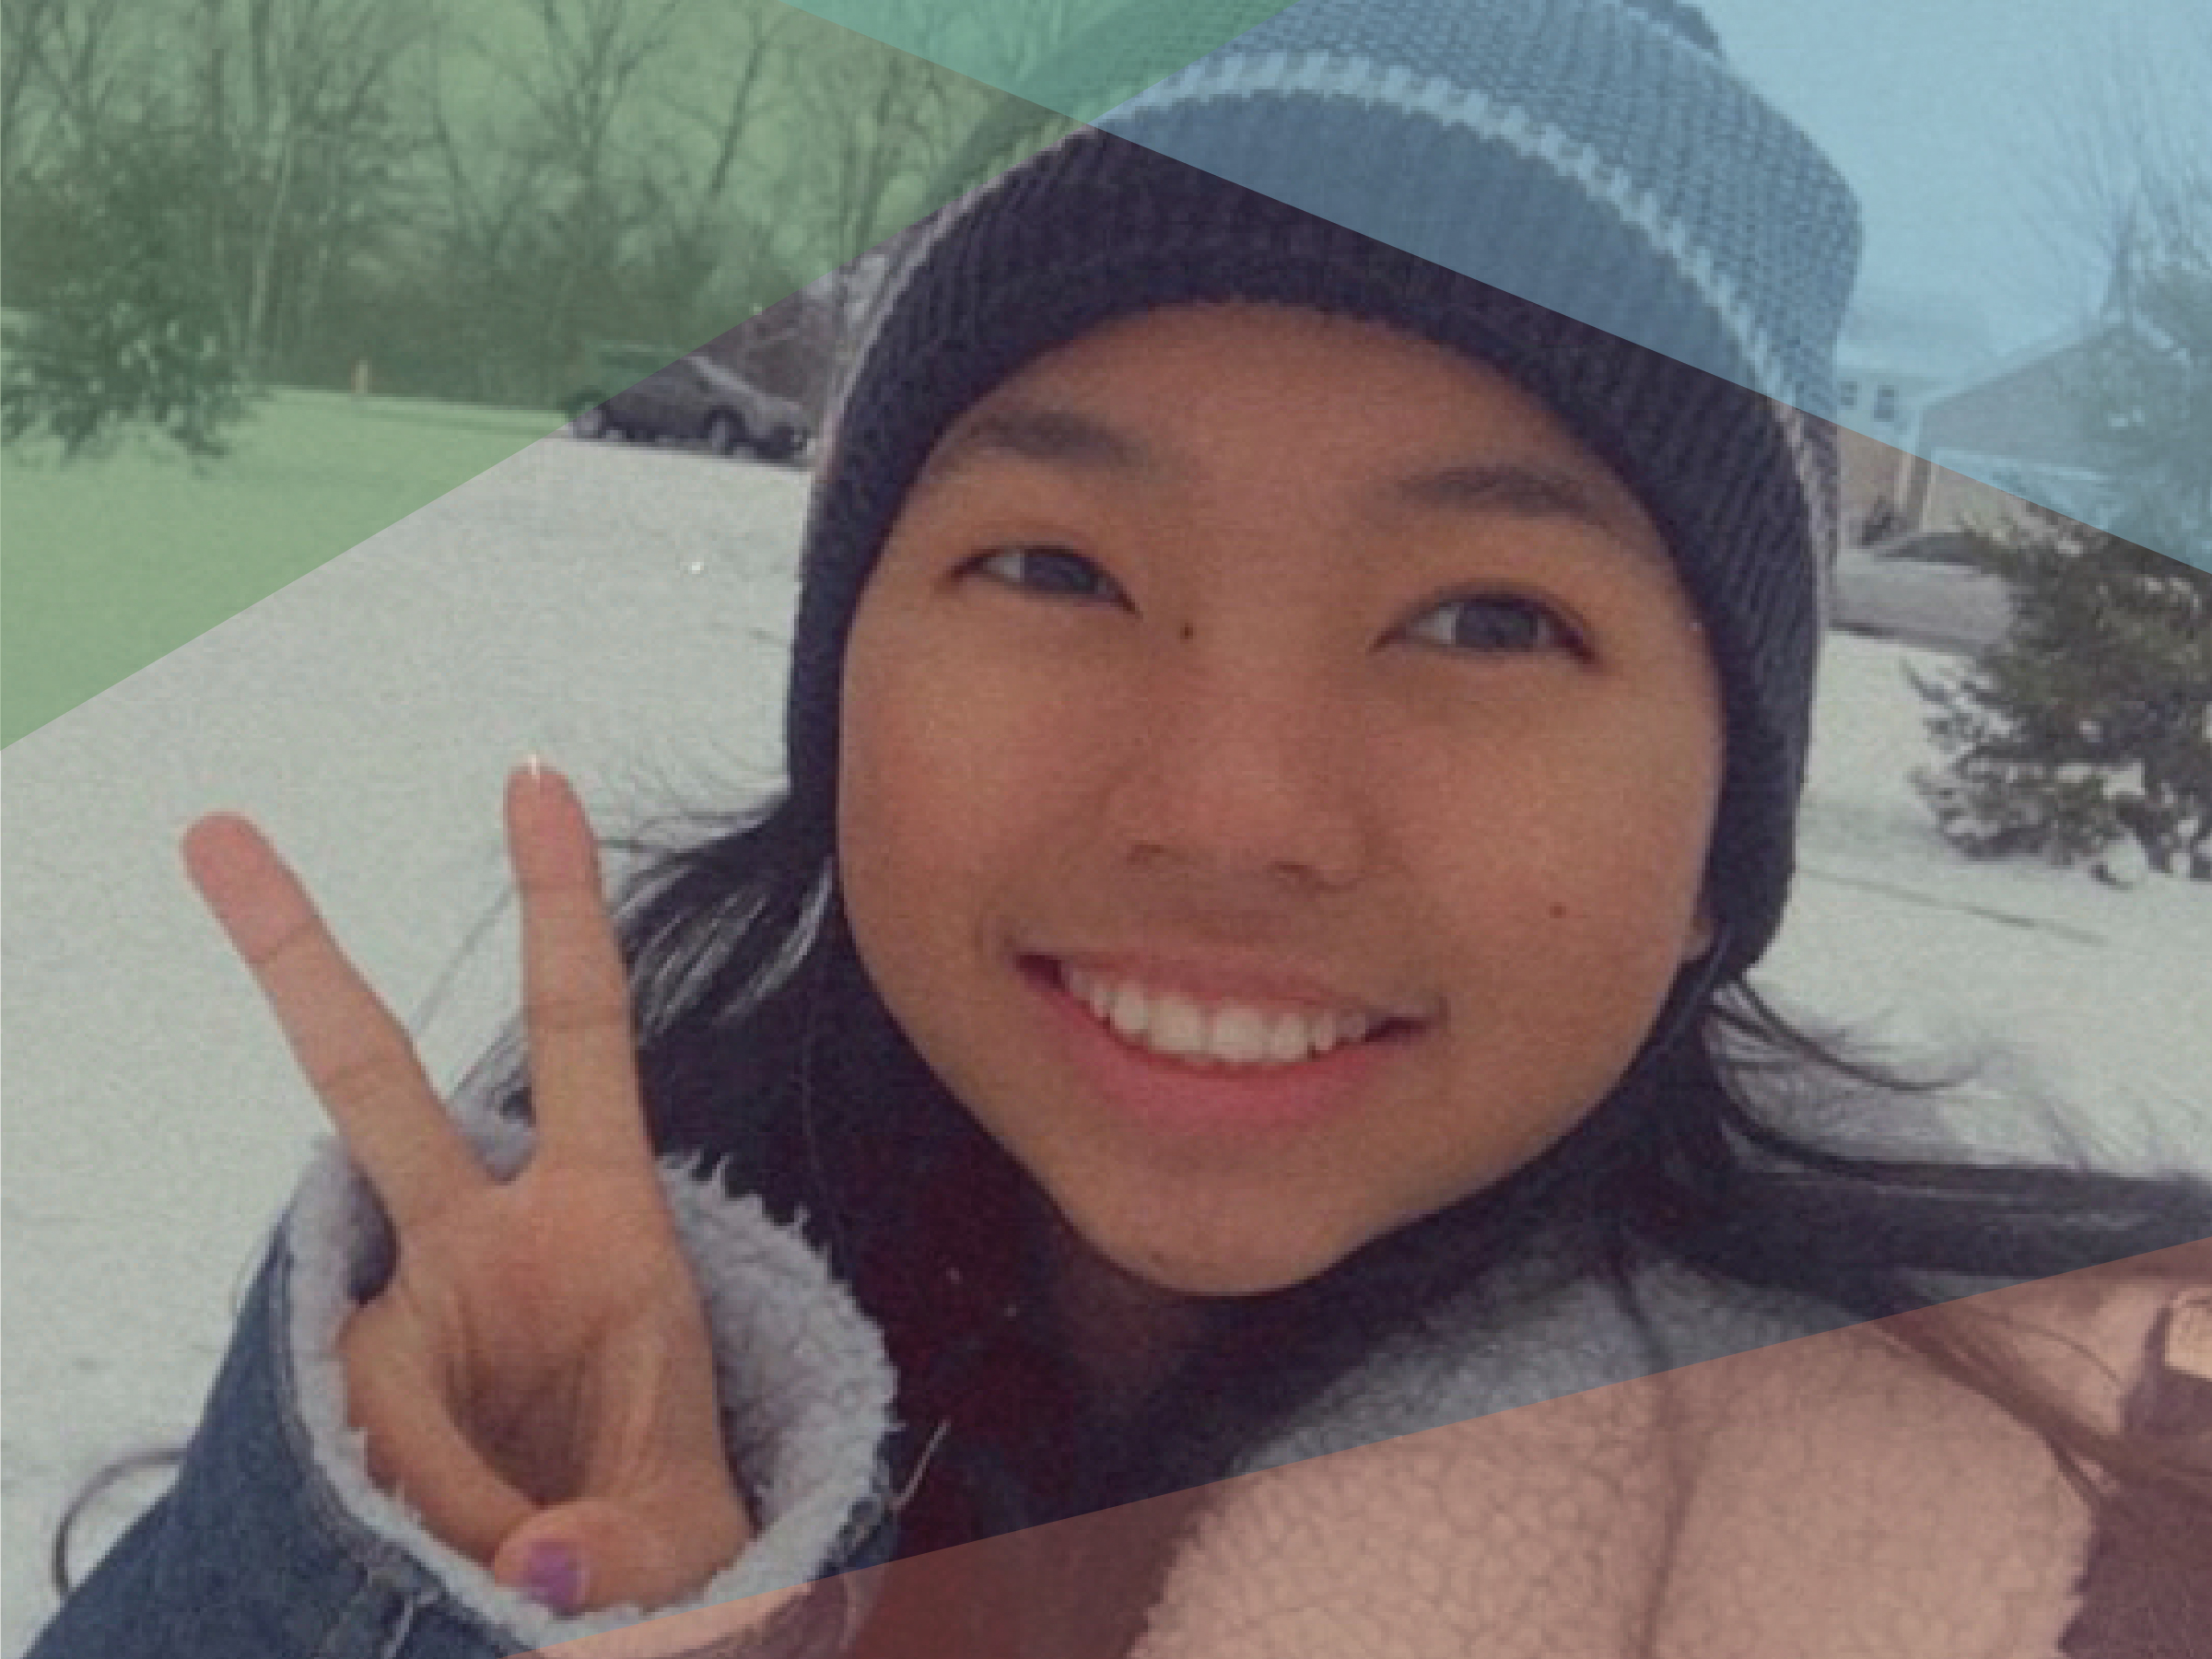 Photo of Menuka Rai smiling and holding a peace sign